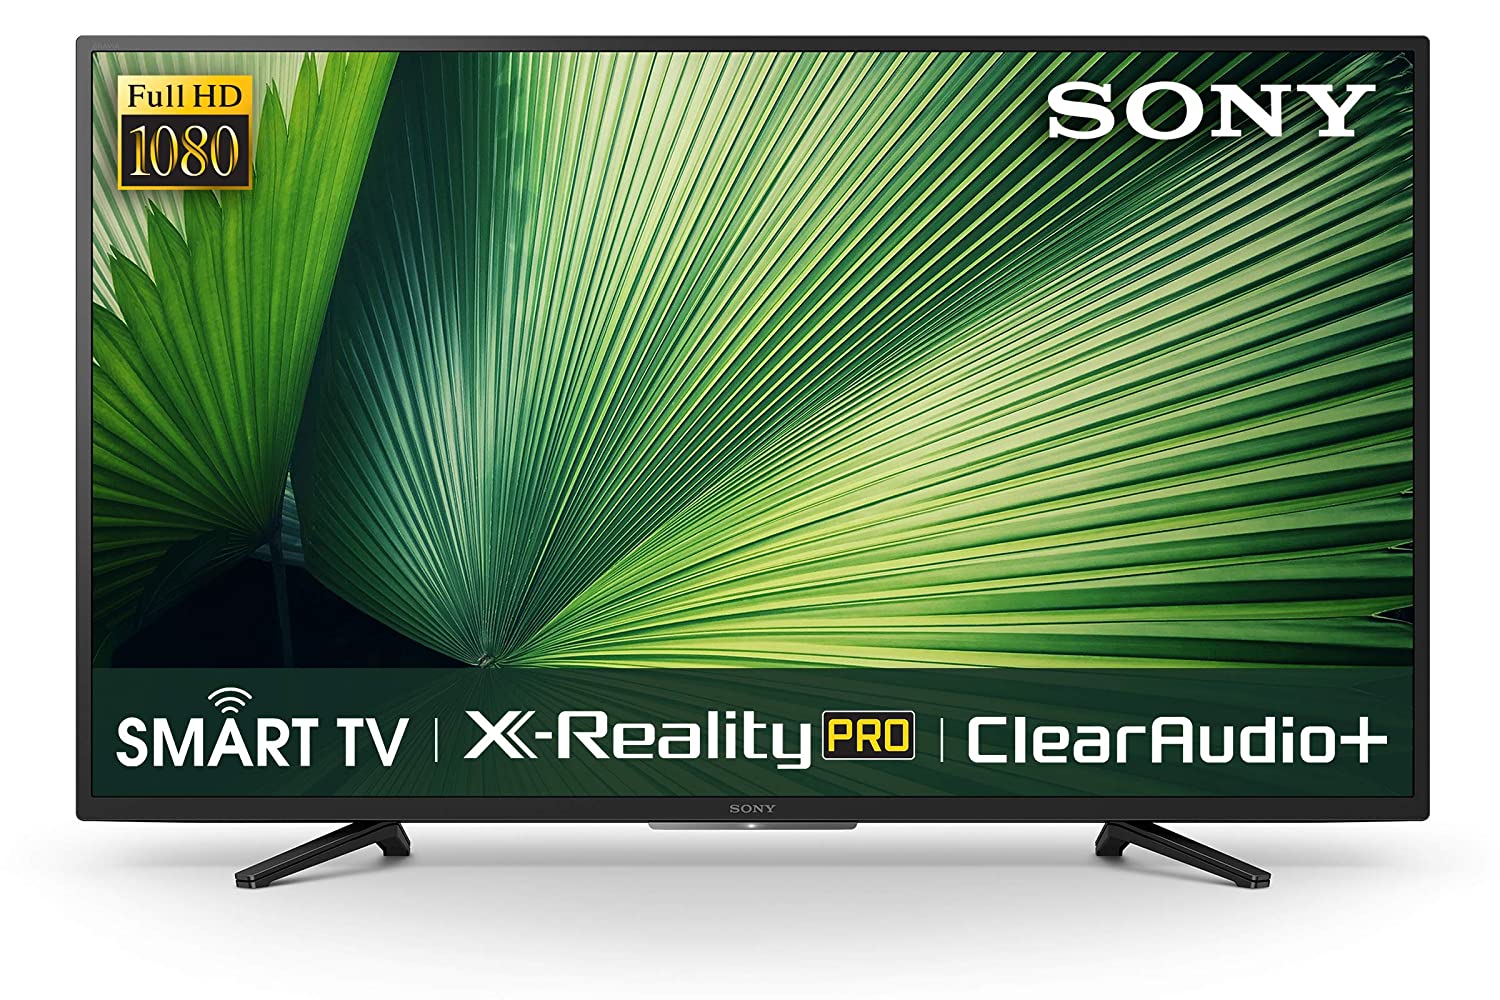 Sony Bravia 43 inches Full HD Smart LED TV